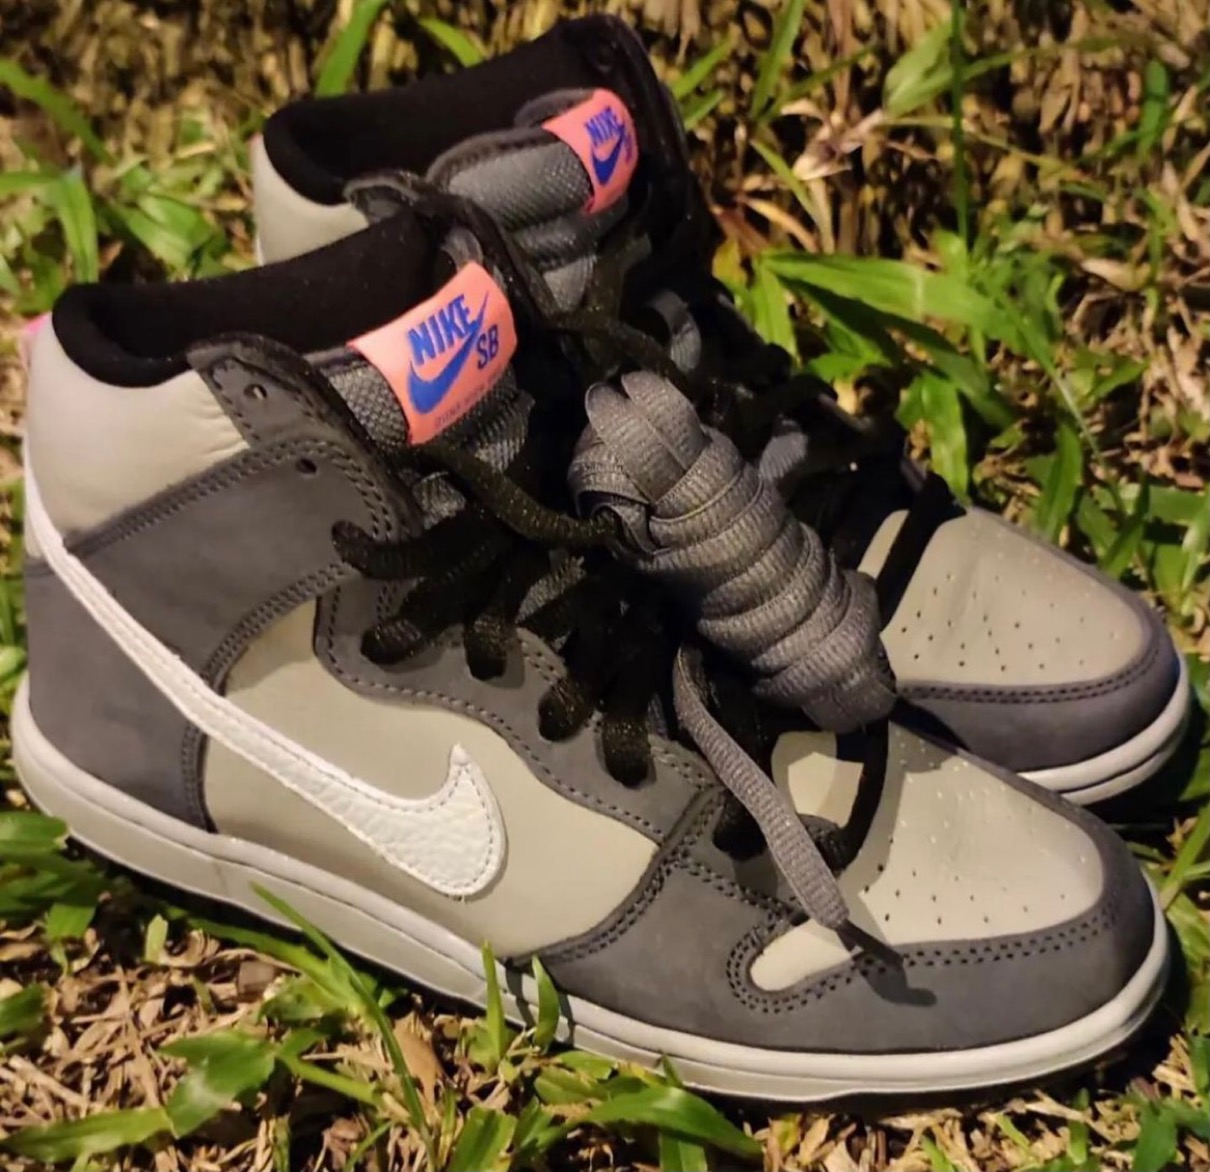 Nike SB】Dunk High Pro “Medium Grey”が国内1月8日に発売予定 | UP TO 